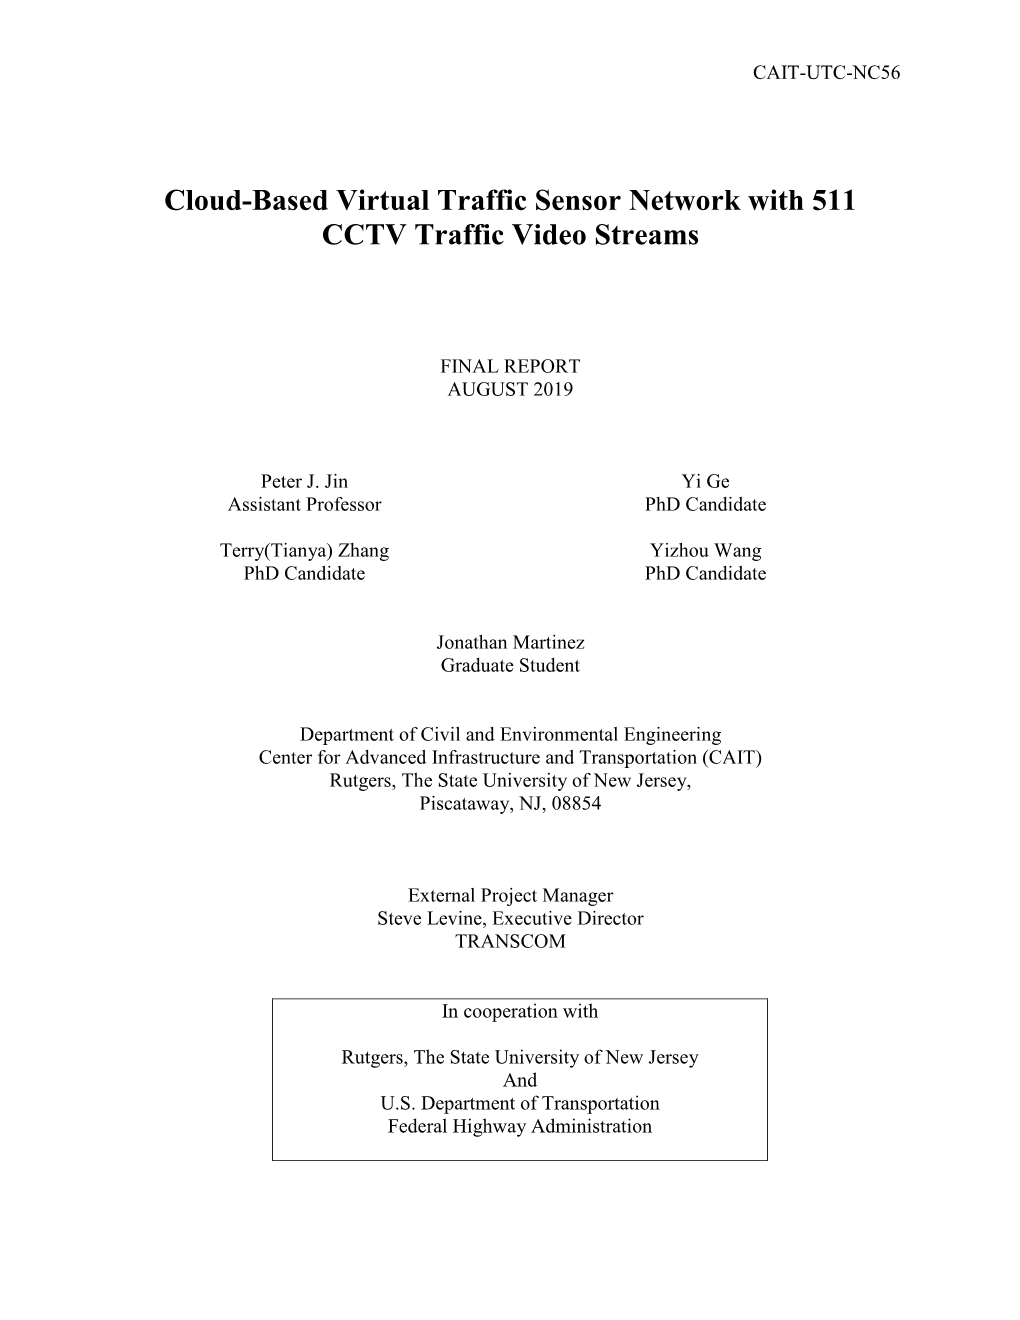 Cloud-Based Virtual Traffic Sensor Network with 511 CCTV Video